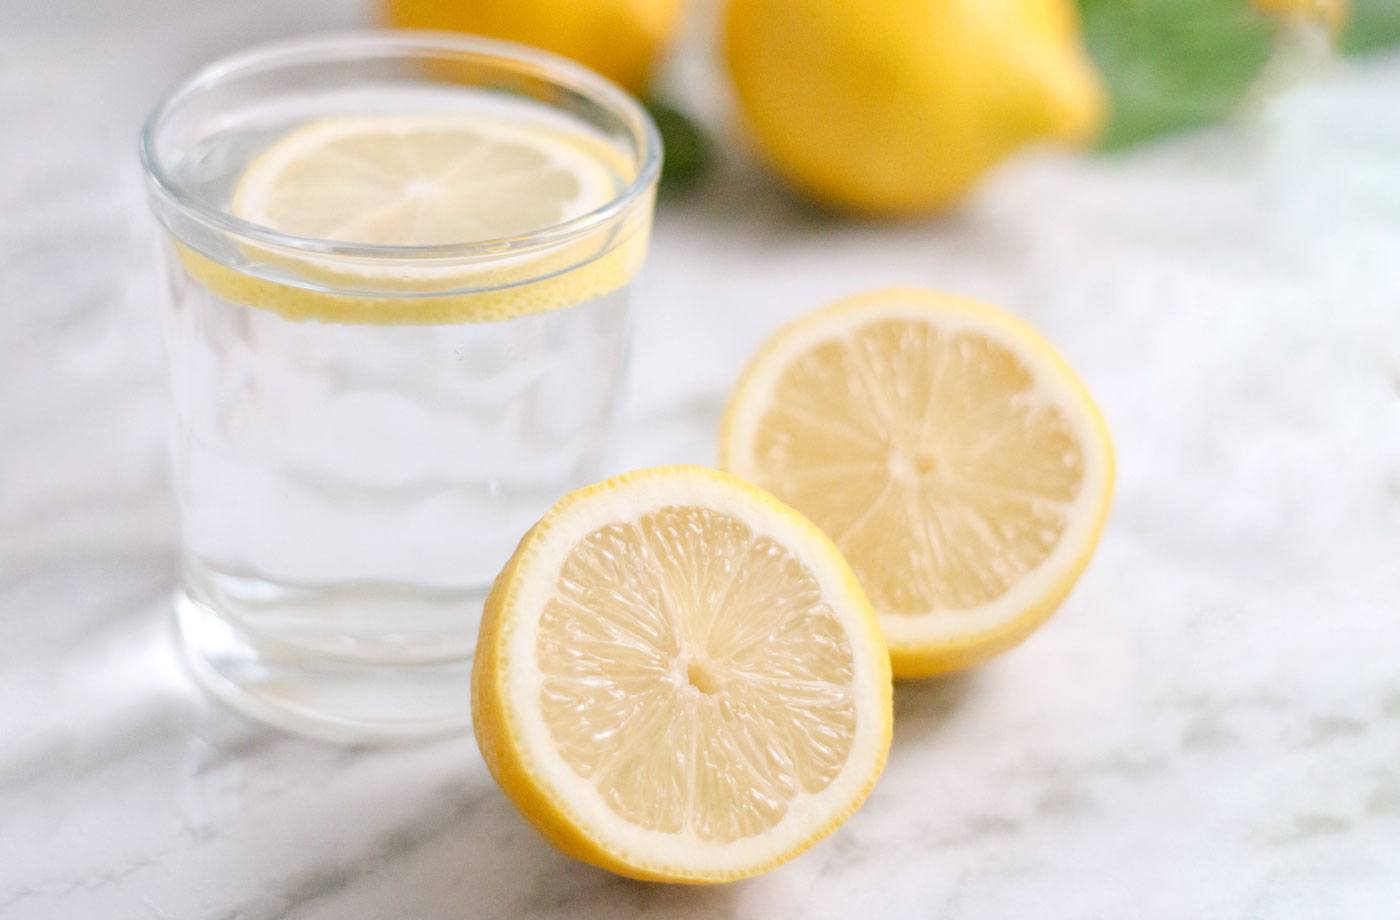 minum-air-lemon-tiap-pagi-supaya-lemak-di-perut-nggak-ada-lagi